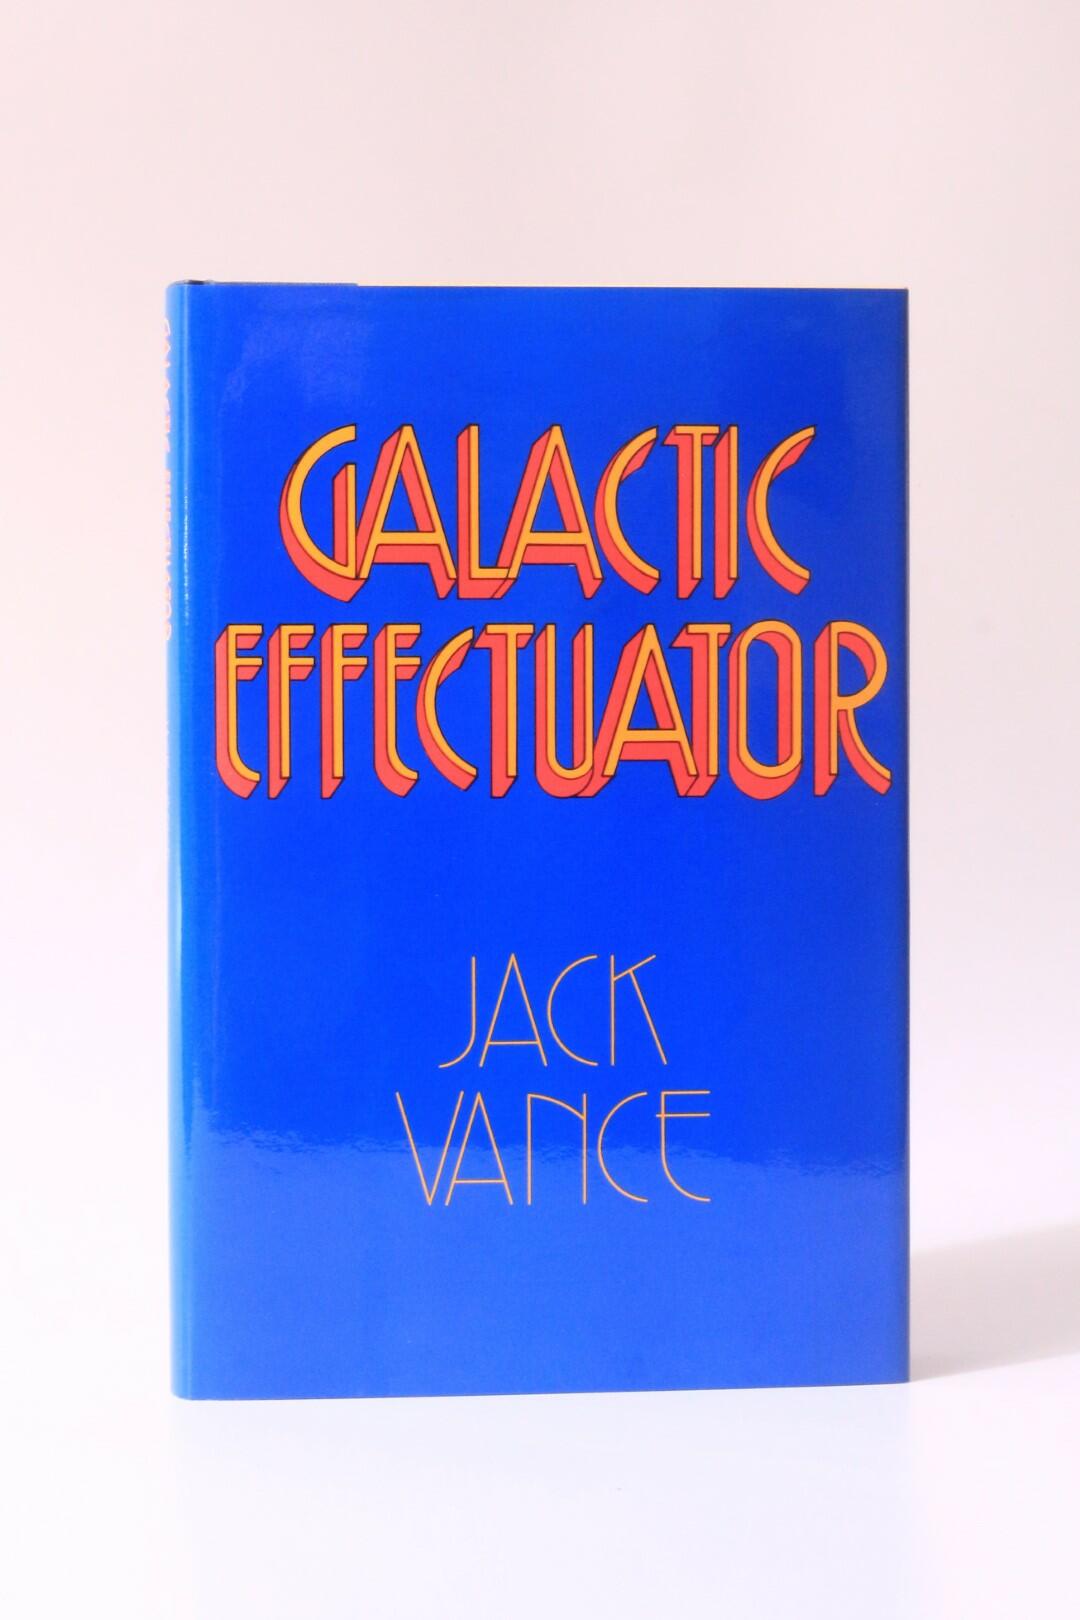 Jack Vance - Galactic Effectuator - Underwood-Miller, 1980, Signed Limited Edition.